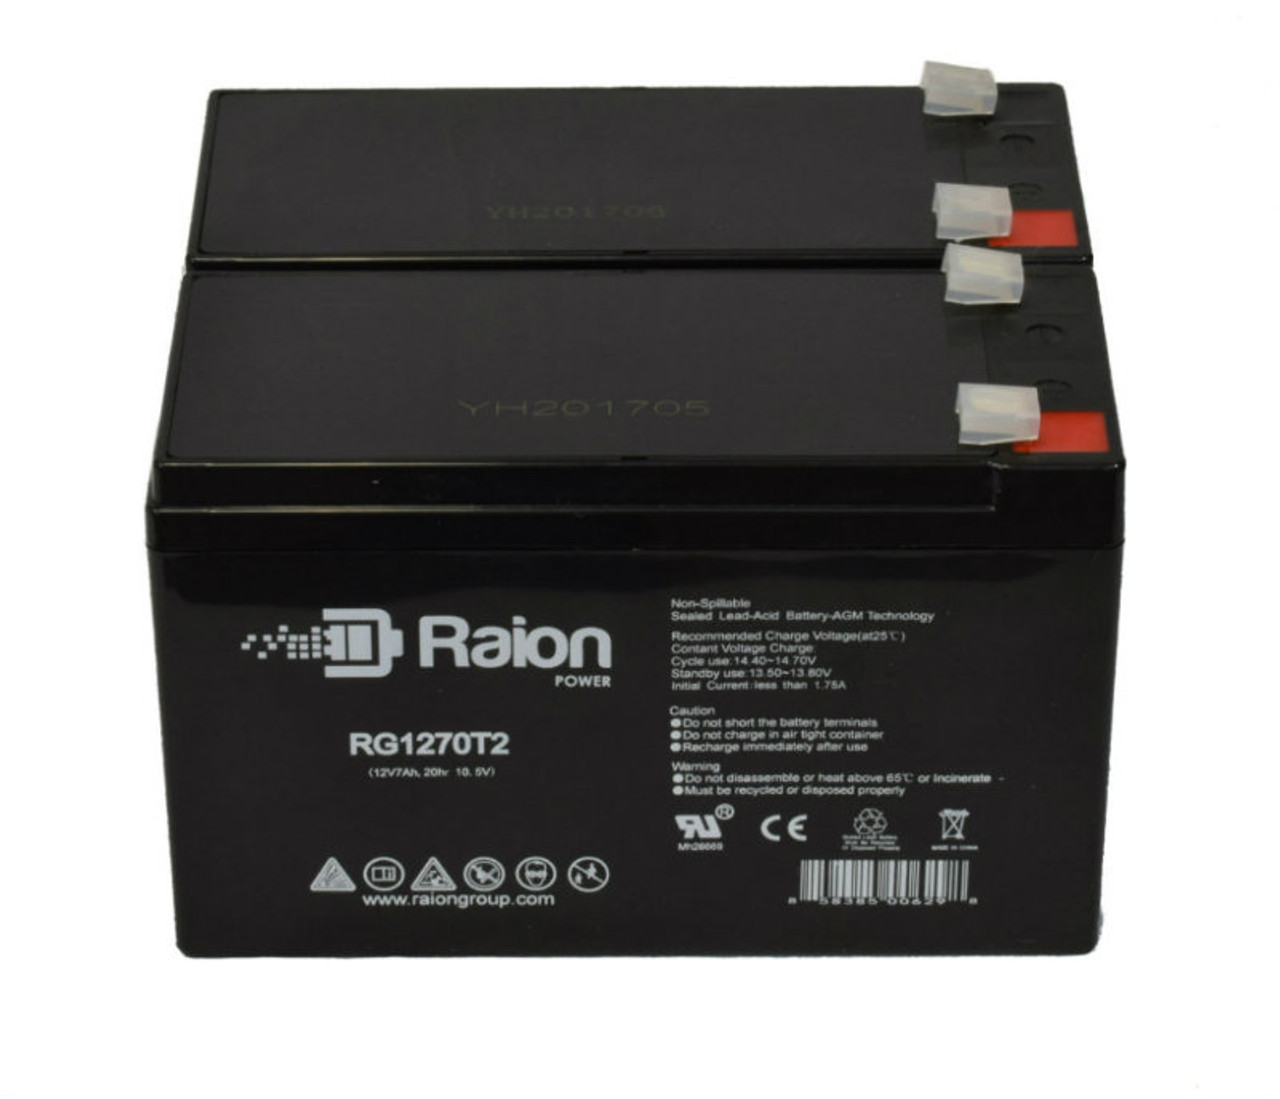 Raion Power Replacement 12V 7Ah Battery for Vasworld Power GB12-7 - 2 Pack